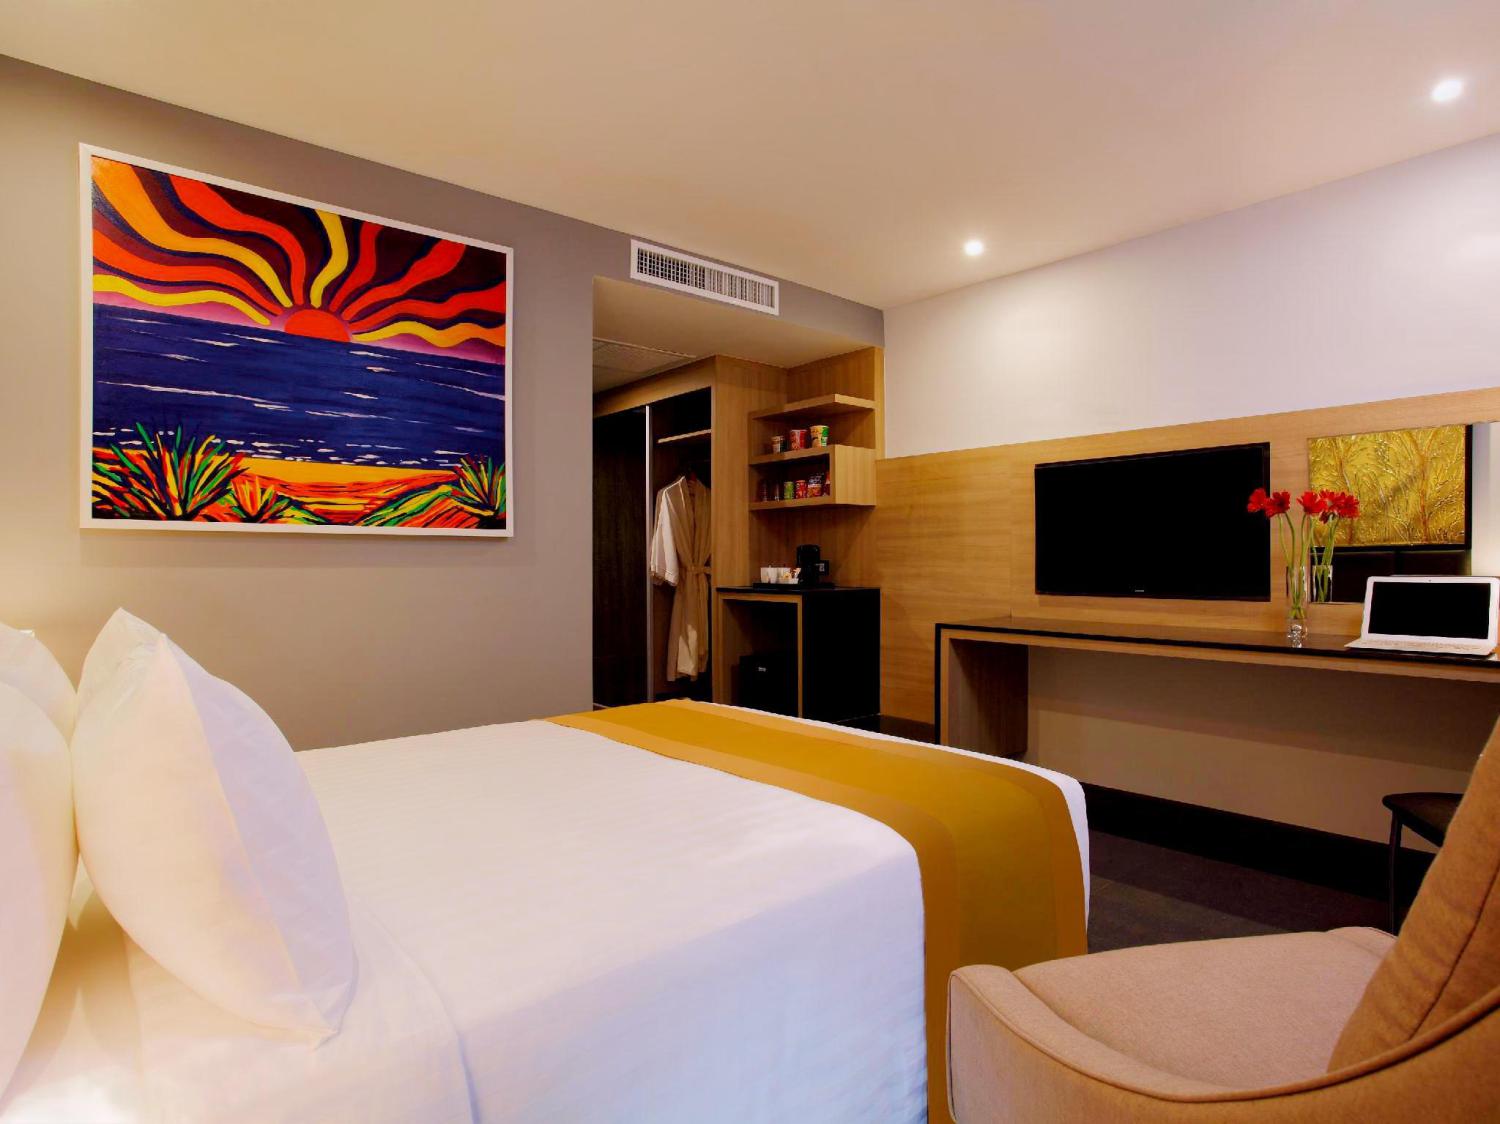 Nova Express Pattaya Hotel - Image 0